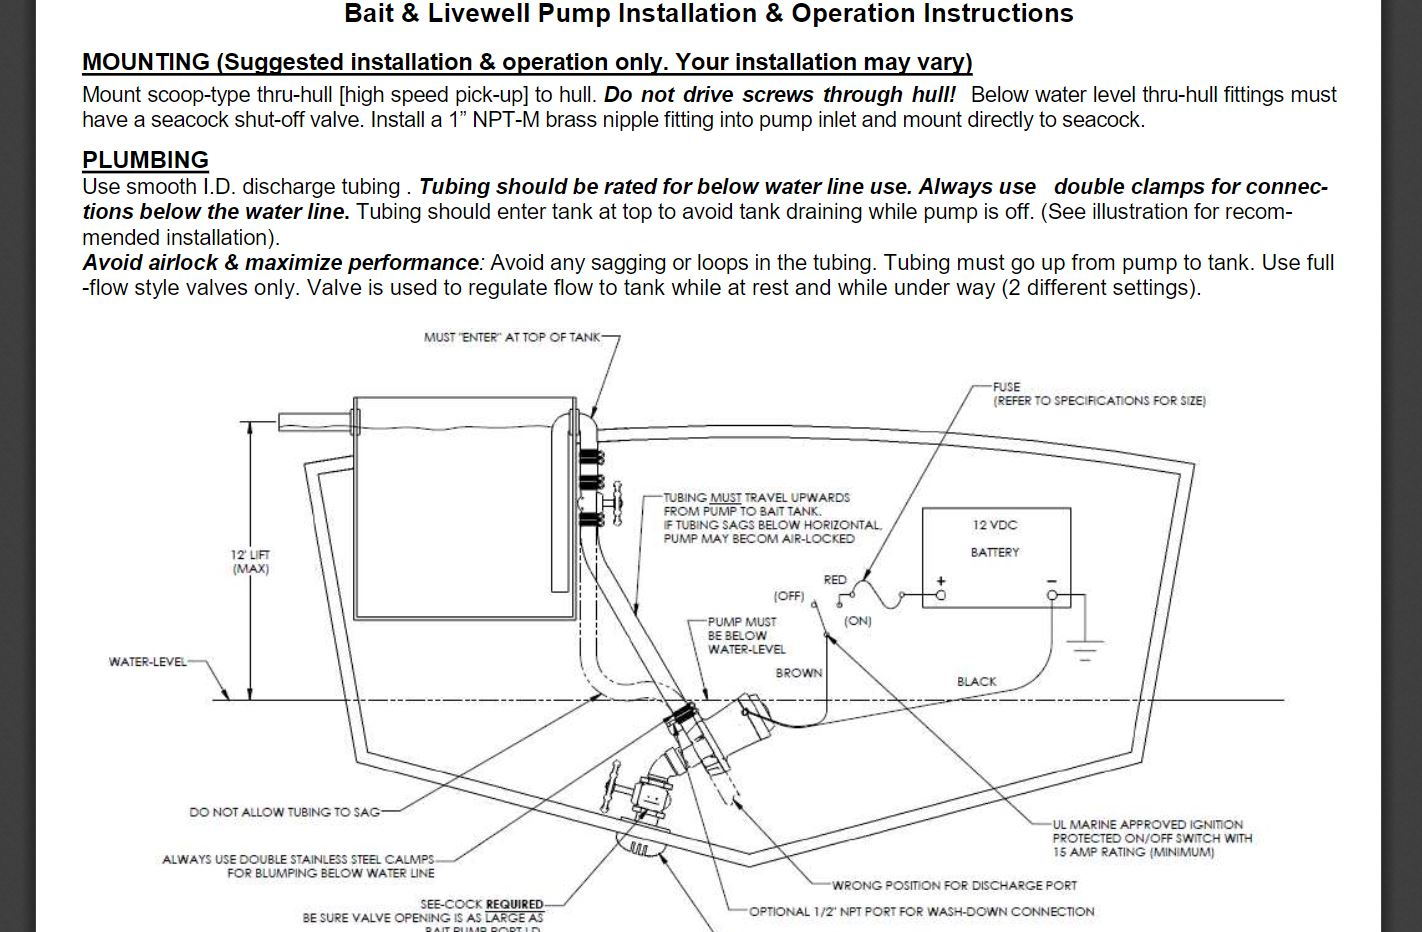 Livewell Pump Wiring